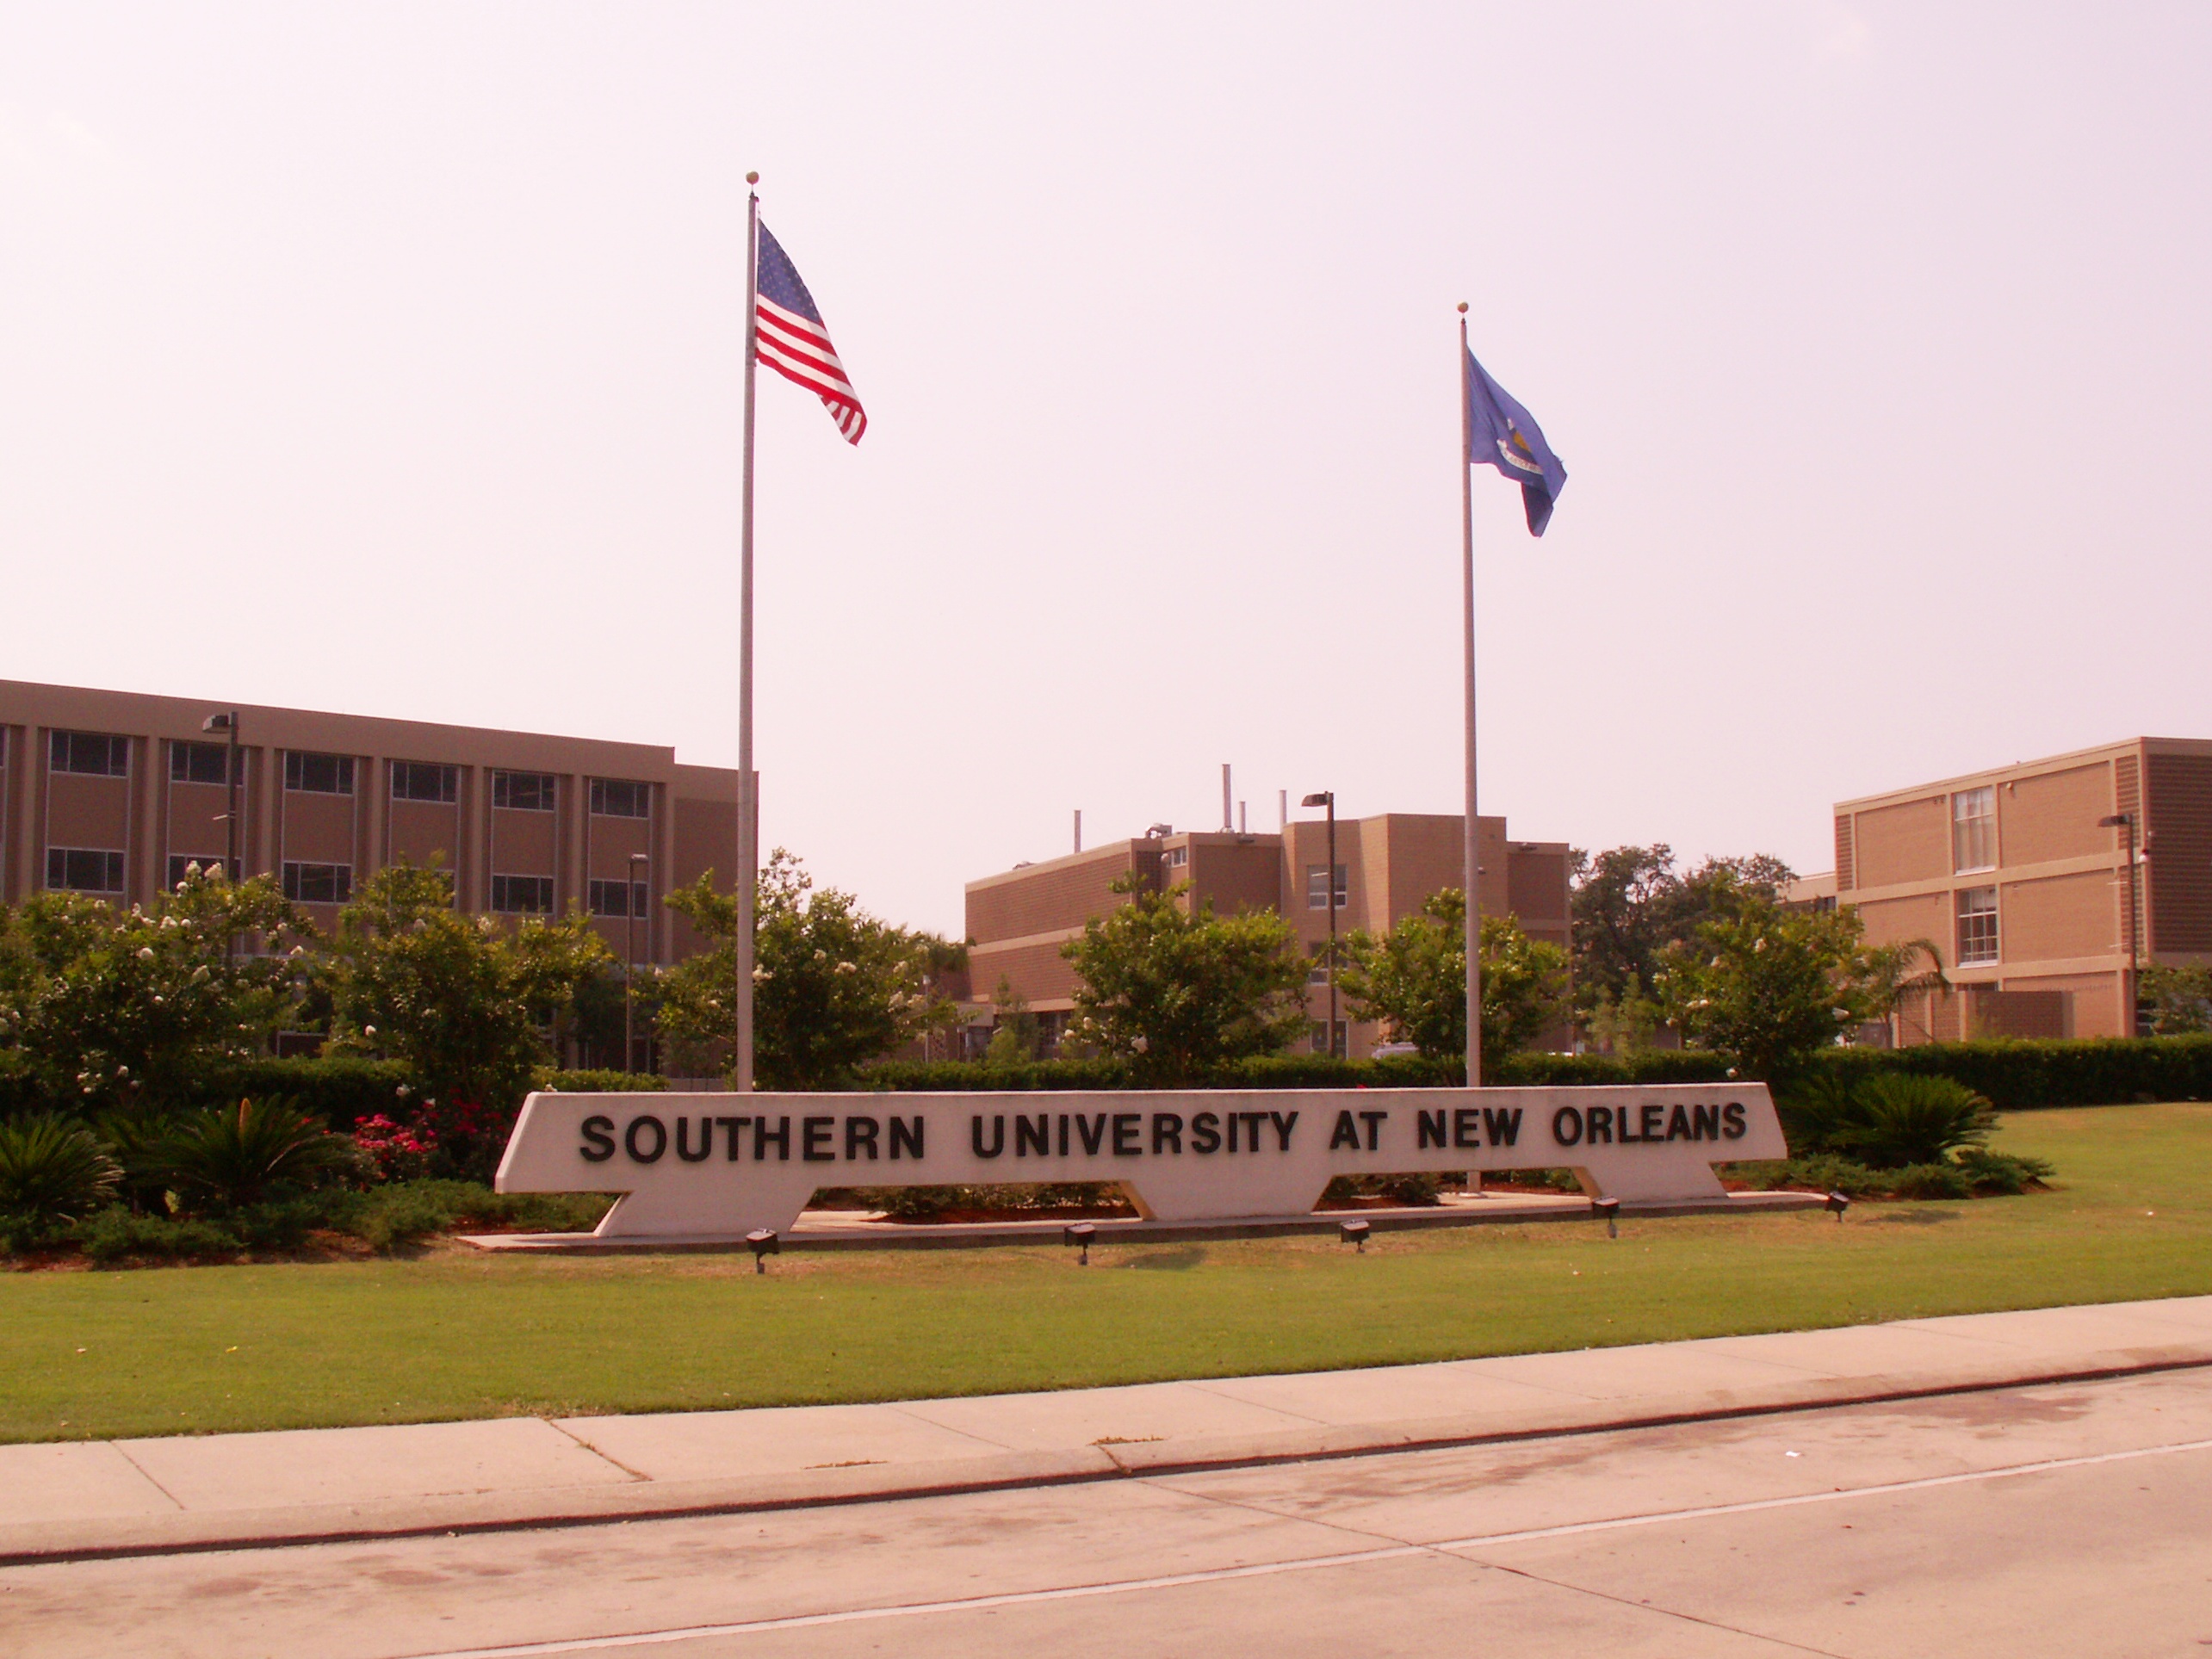 3) Southern University at New Orleans, Louisiana